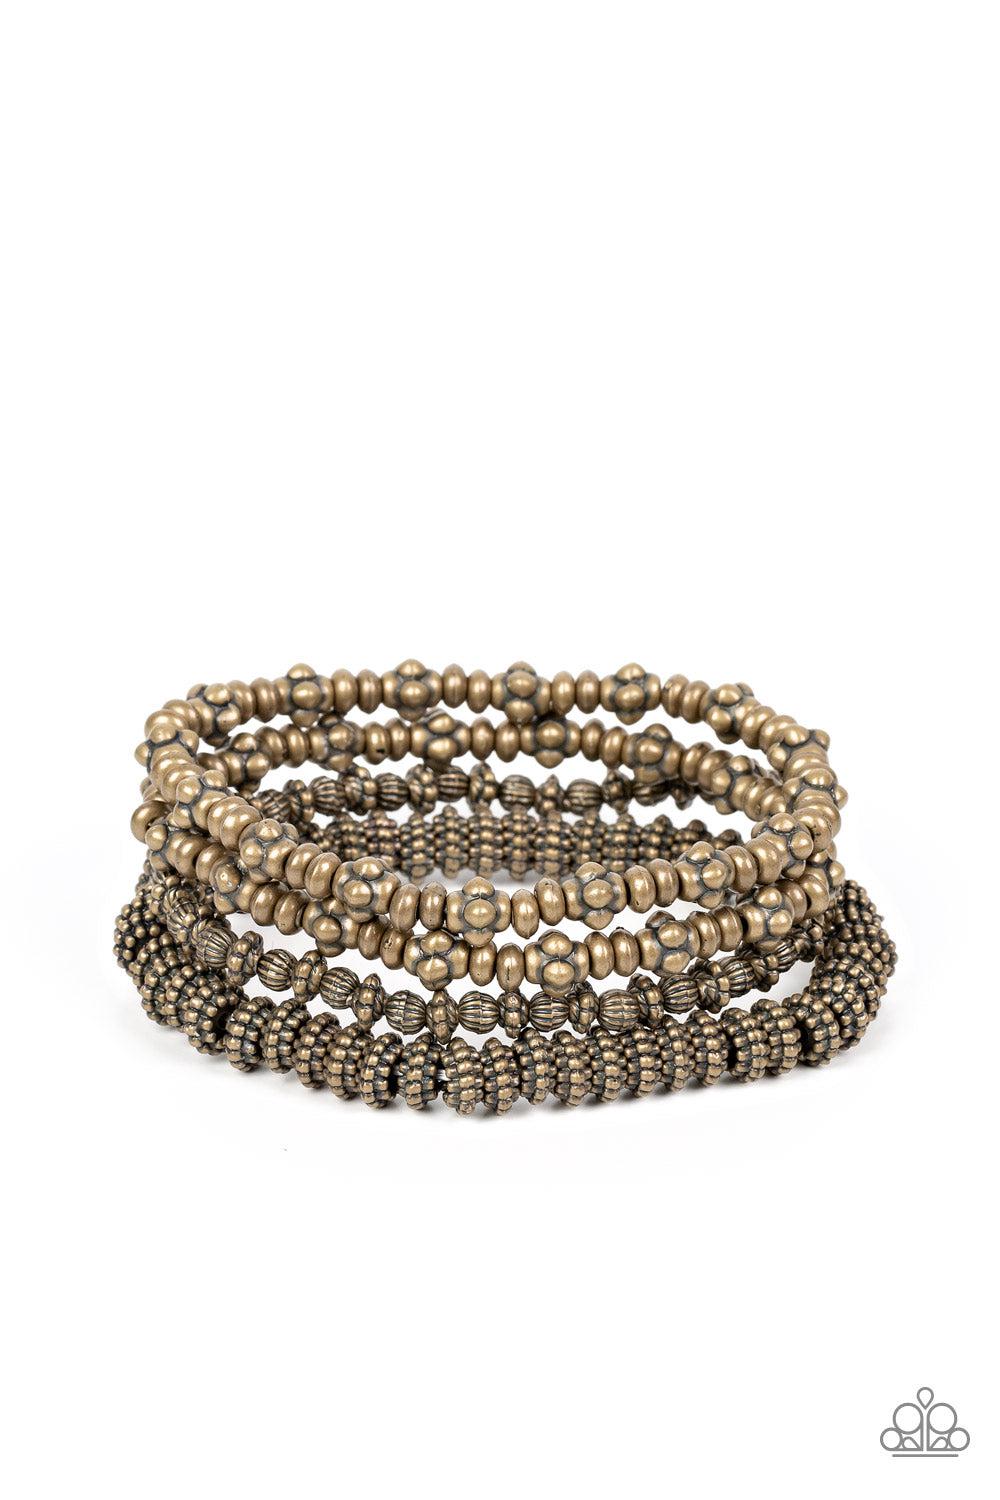 Country Charmer Brass Bracelet - Paparazzi Accessories- lightbox - CarasShop.com - $5 Jewelry by Cara Jewels